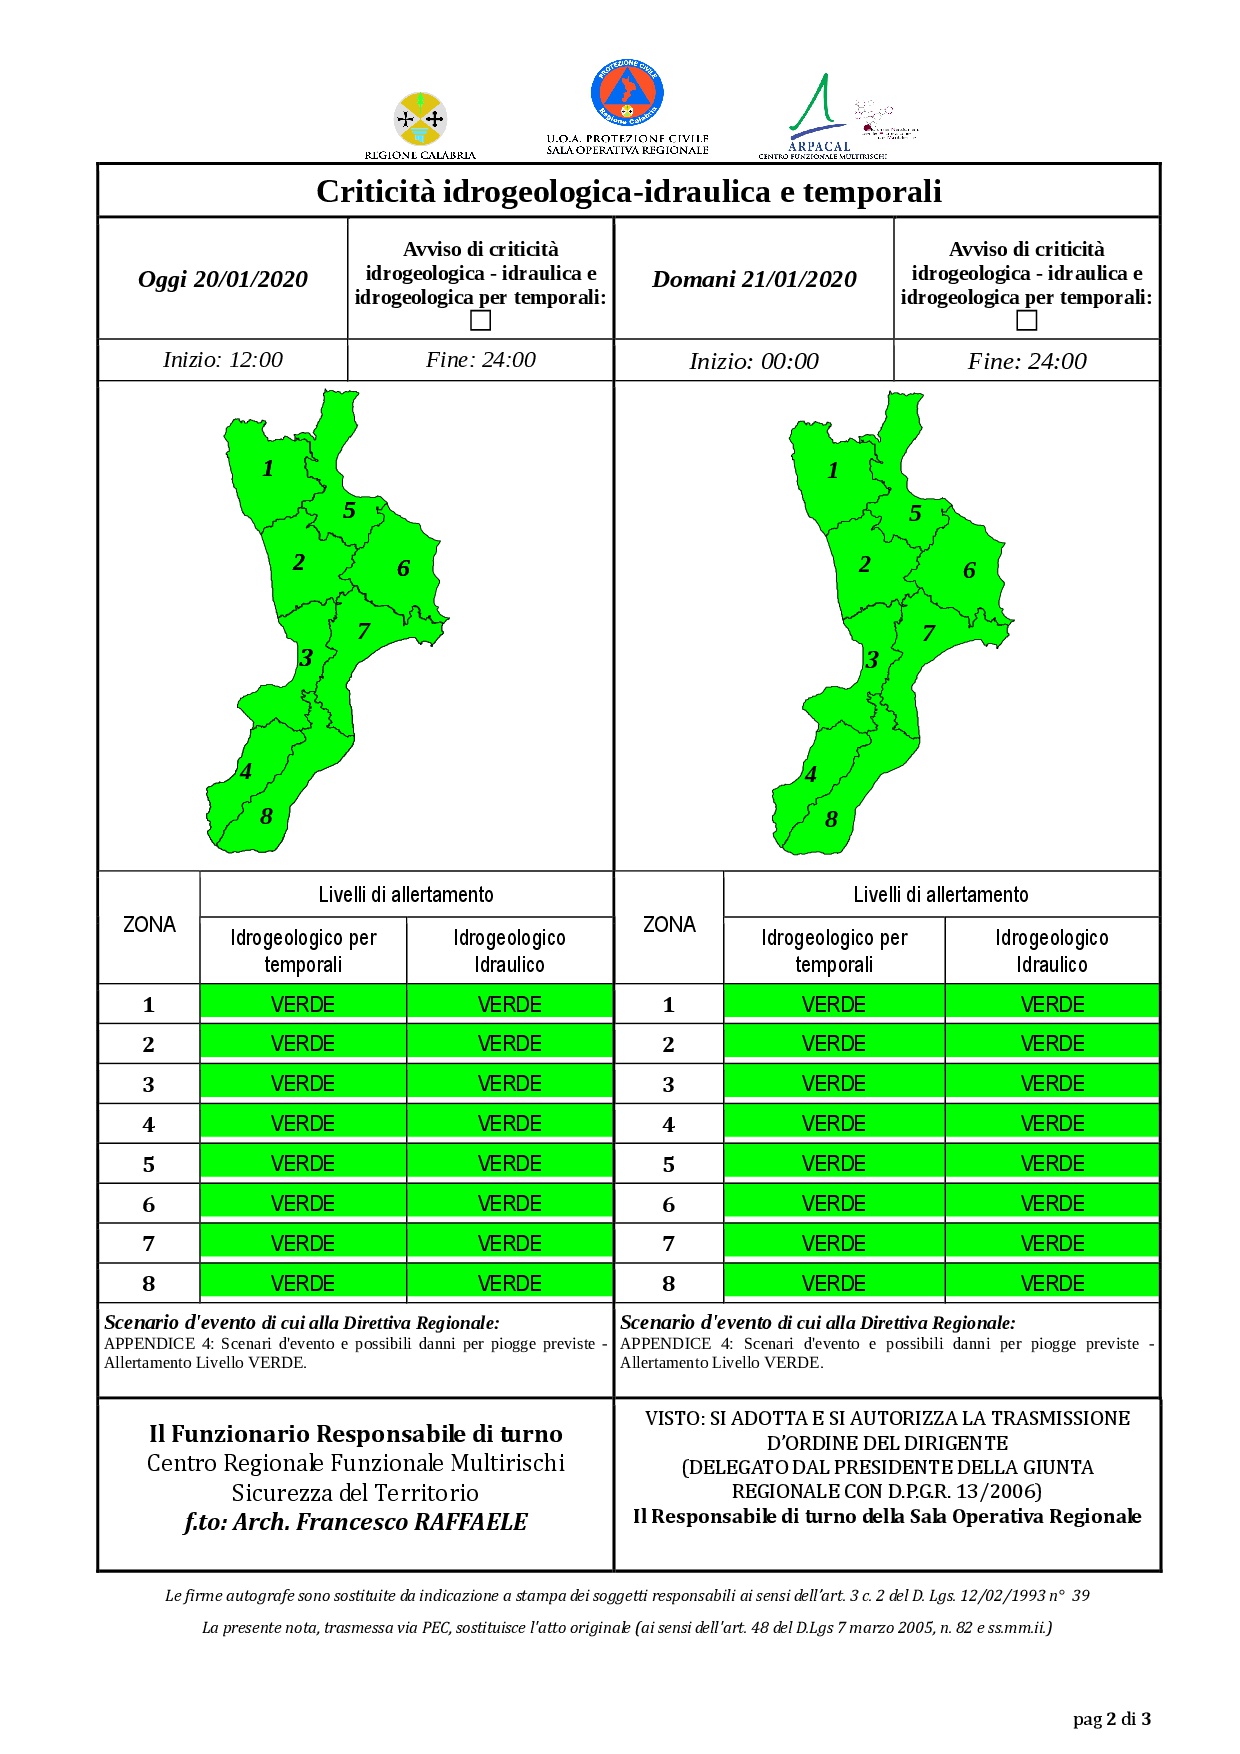 Criticità idrogeologica-idraulica e temporali in Calabria 20-01-2020